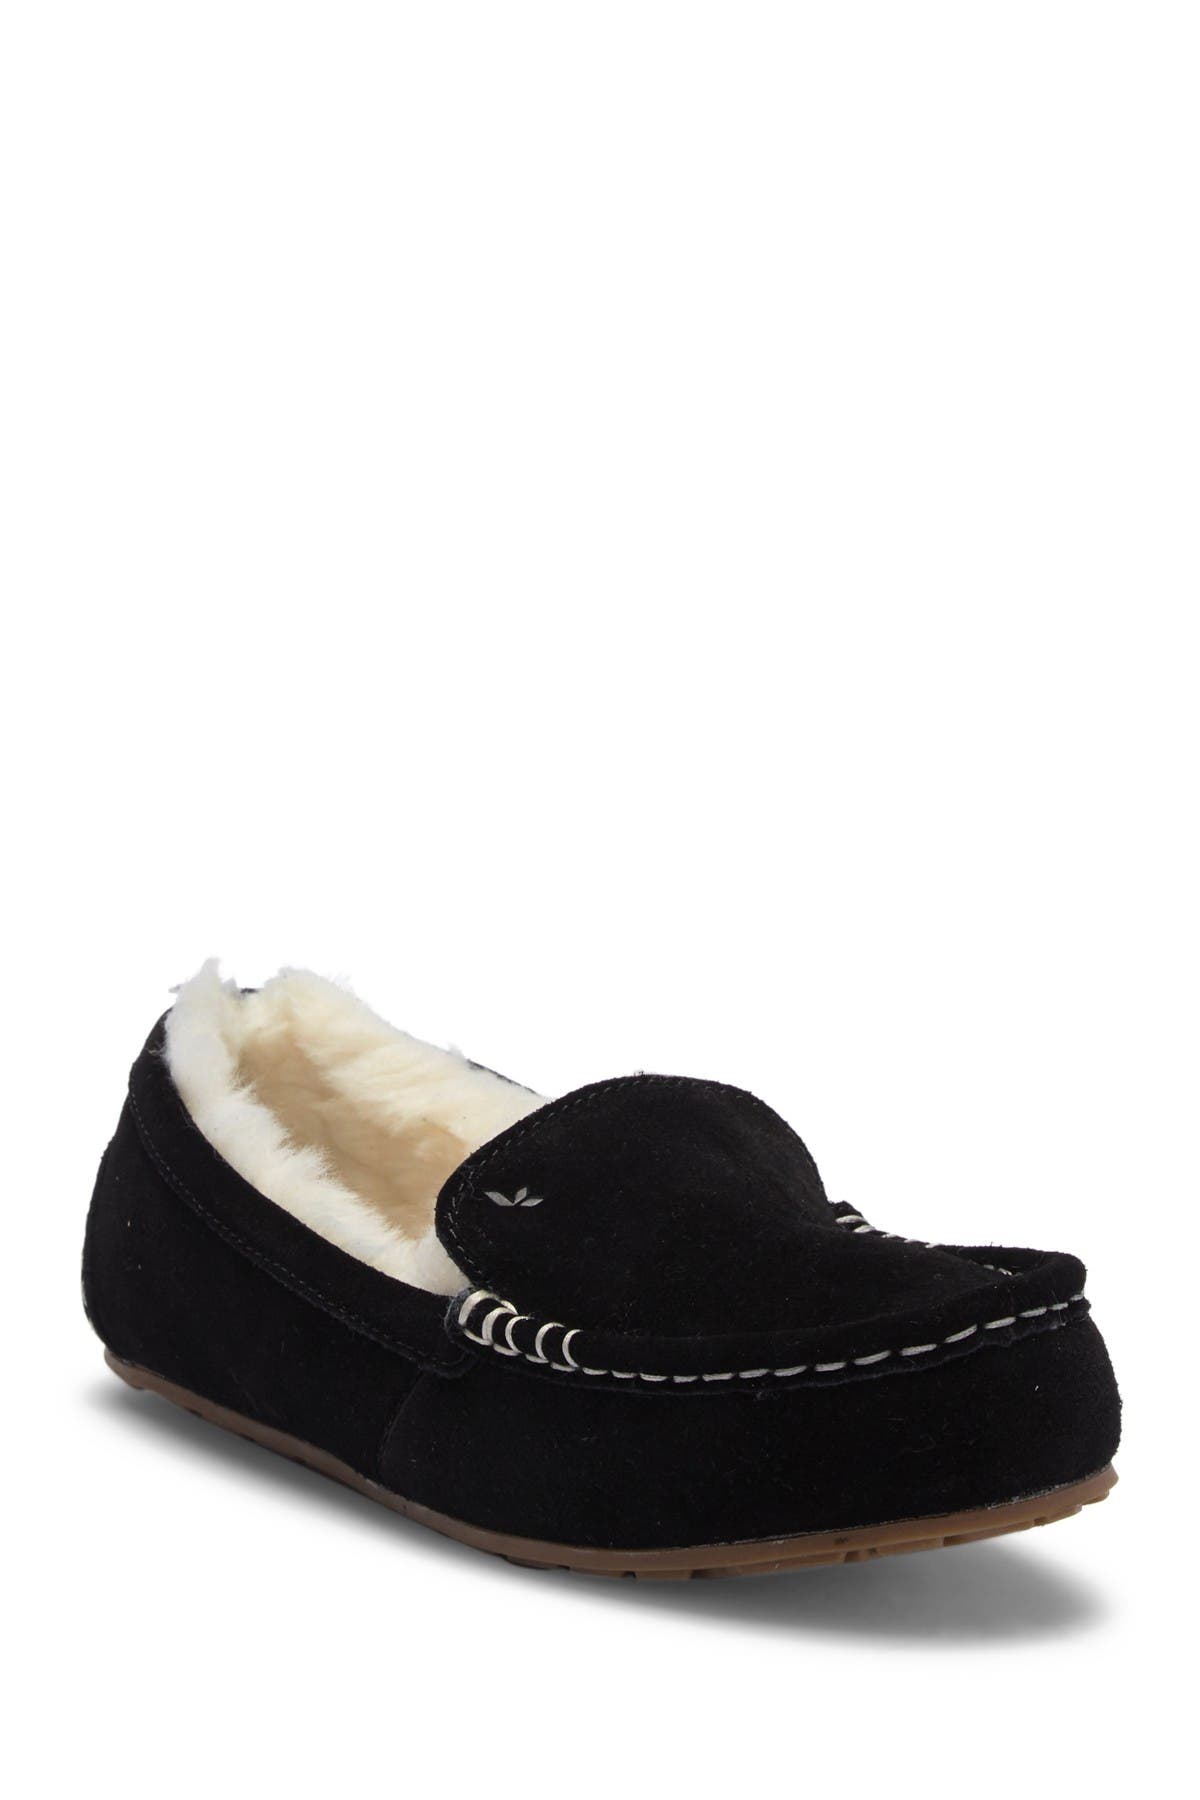 koolaburra by ugg lezly women's slippers